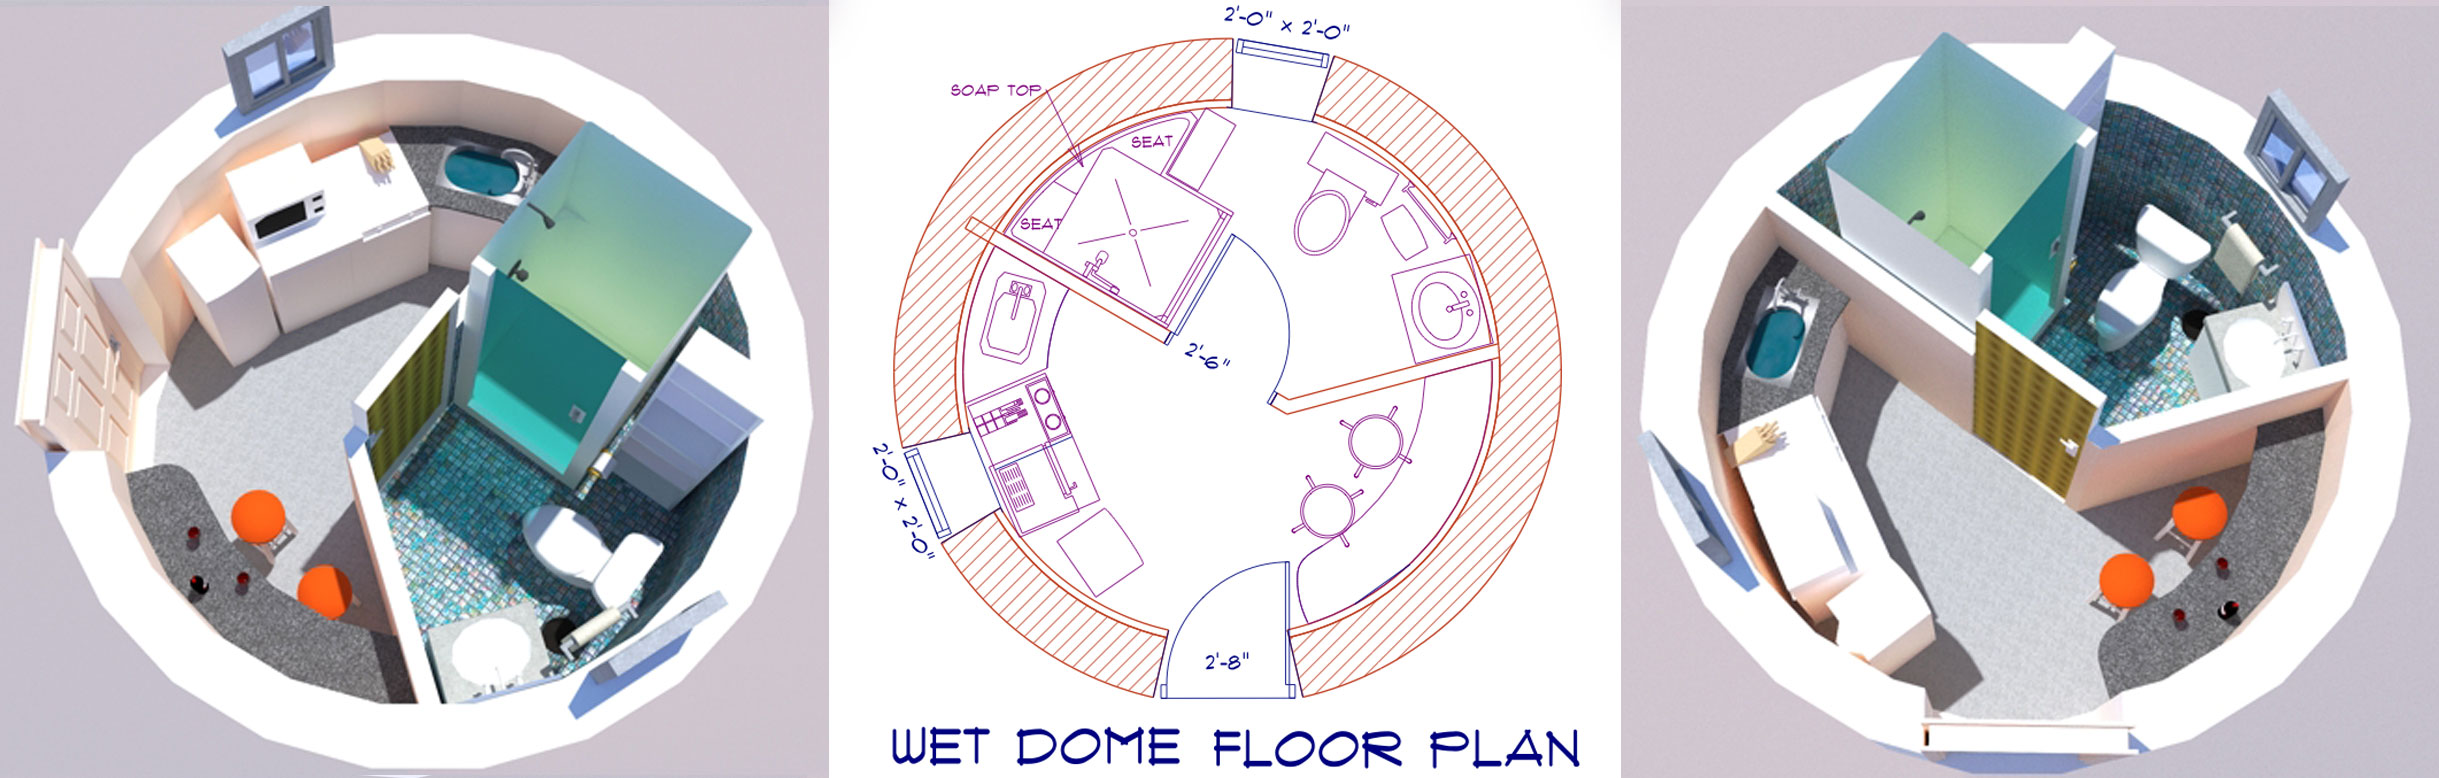 Wet Dome Floor Plan large